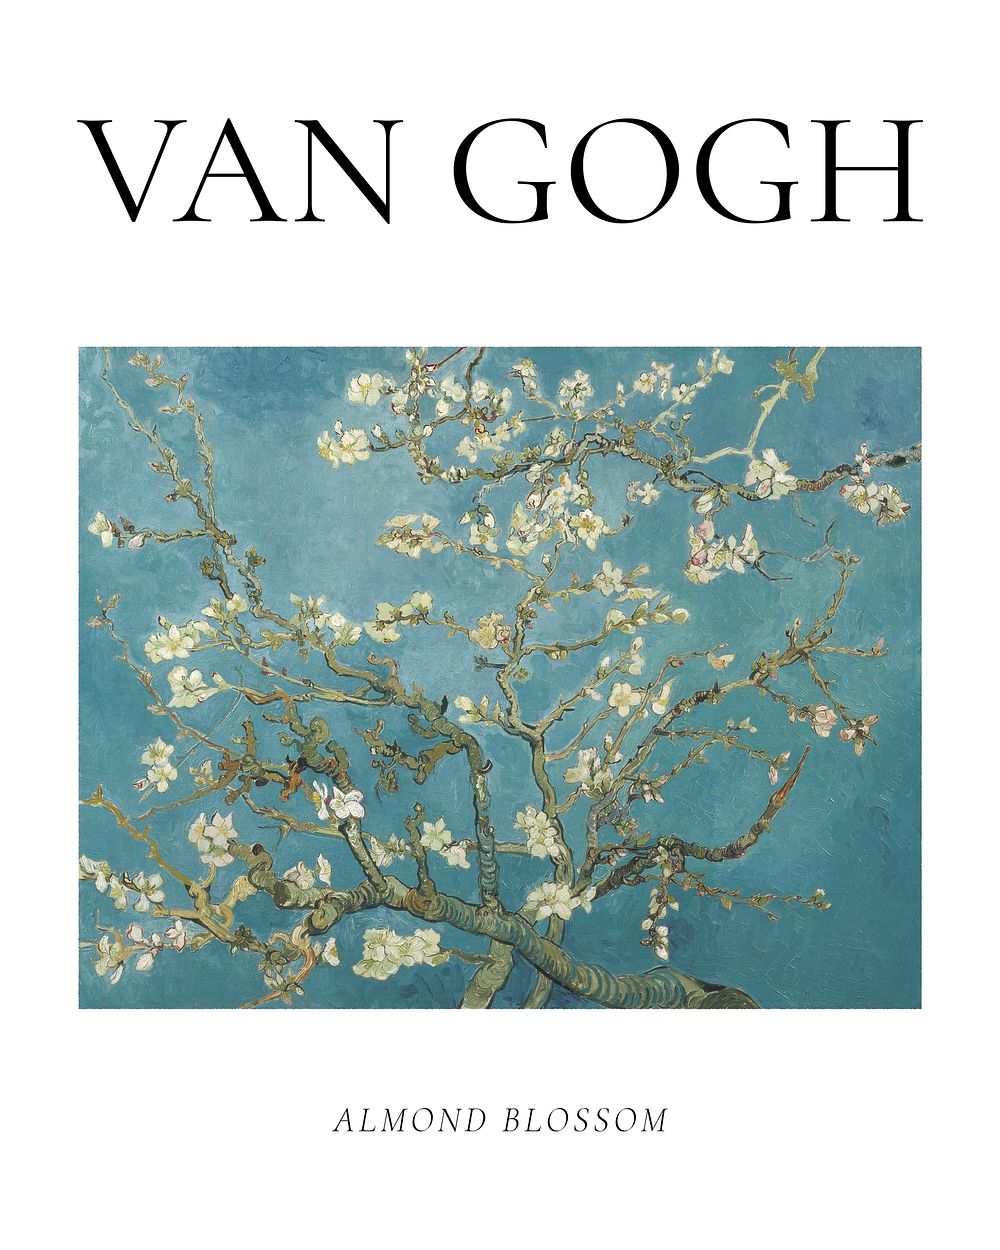 Van Gogh poster, famous painting Almond blossom wall art print decor.